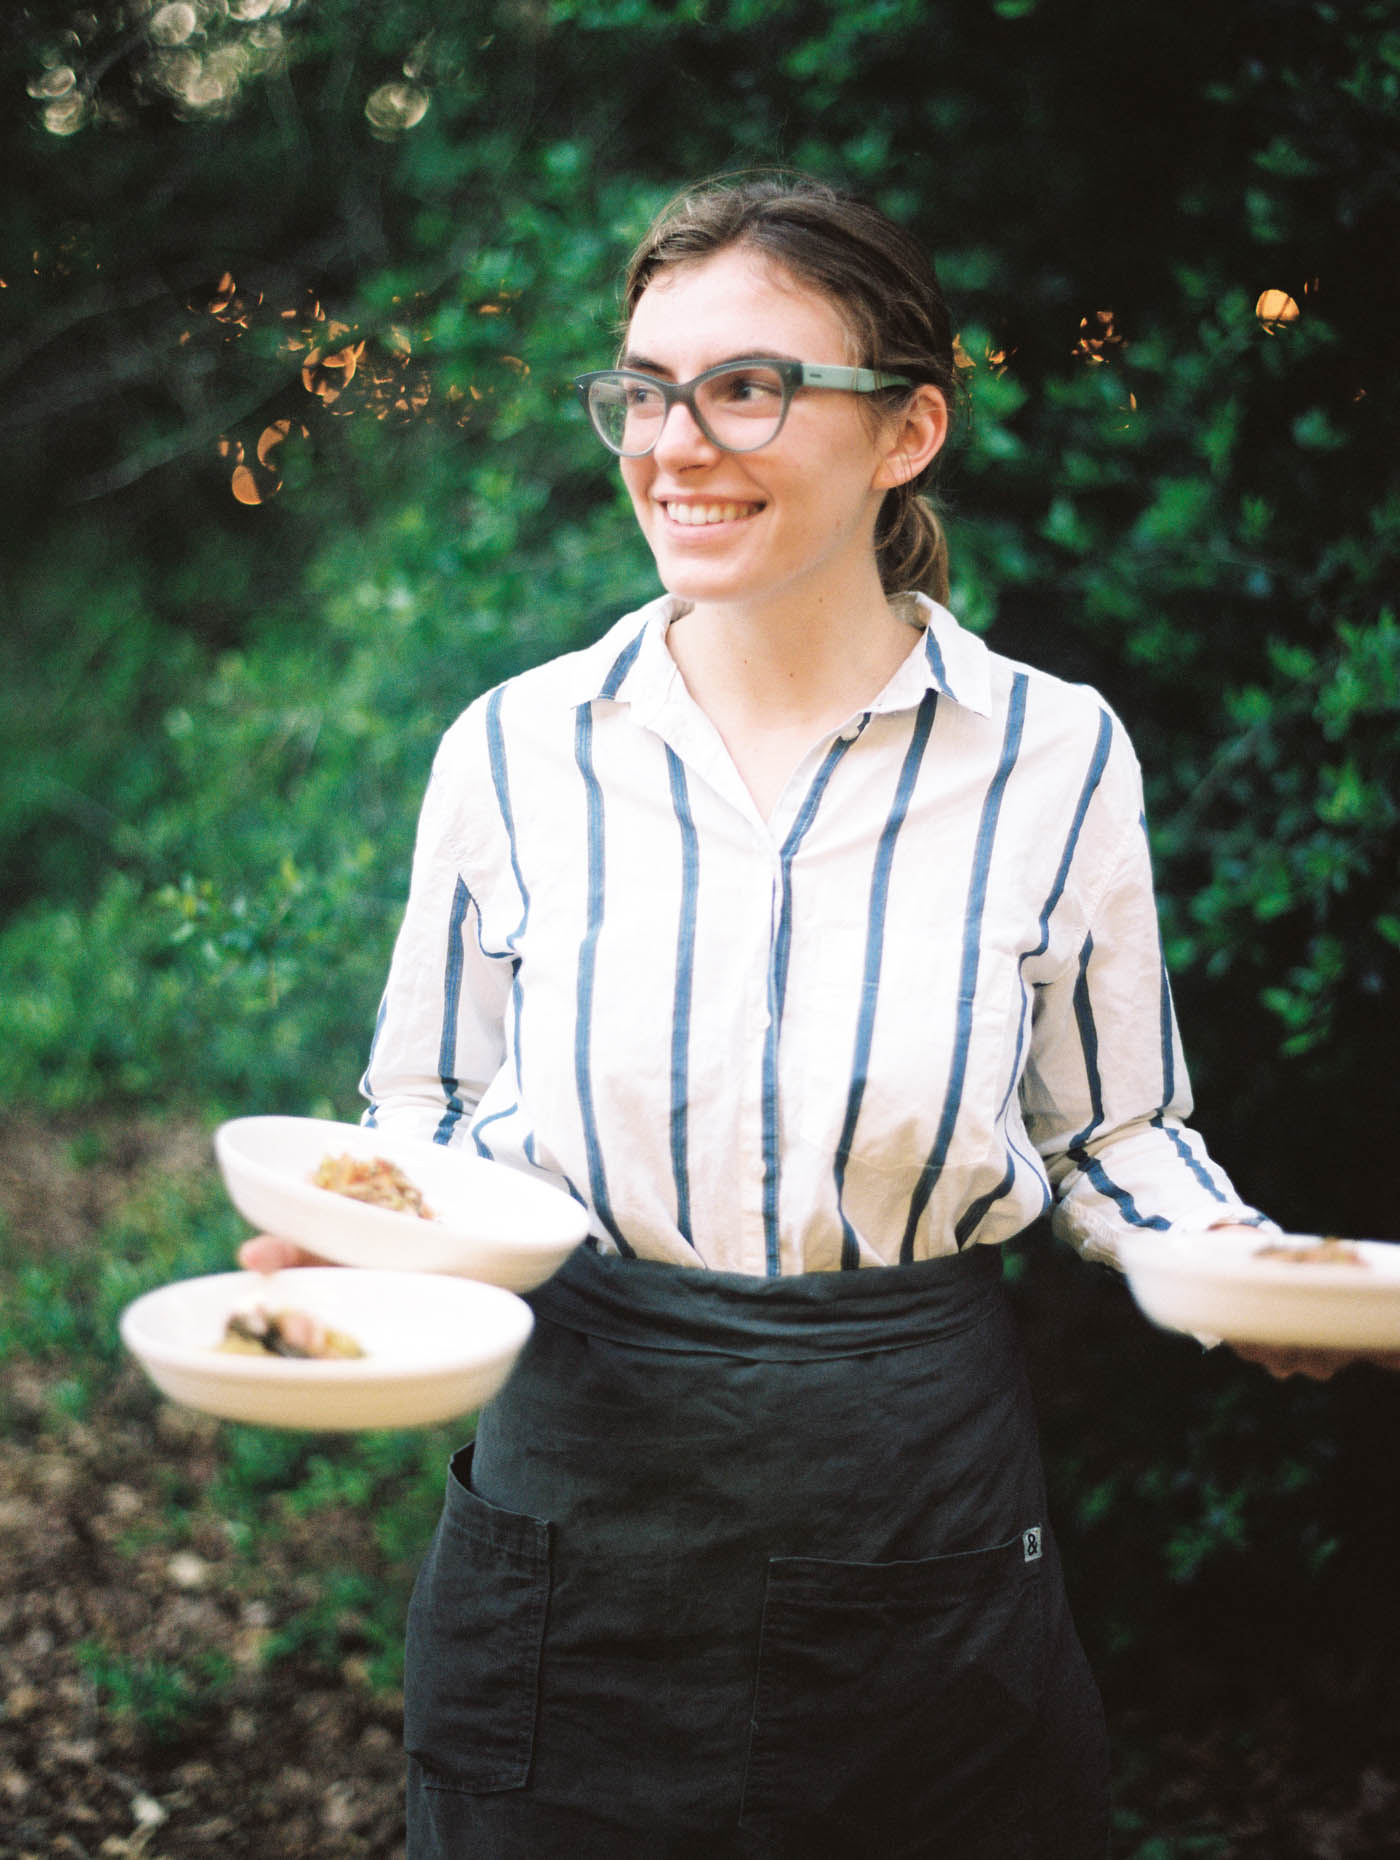 natural organic waitress portrait outdoors